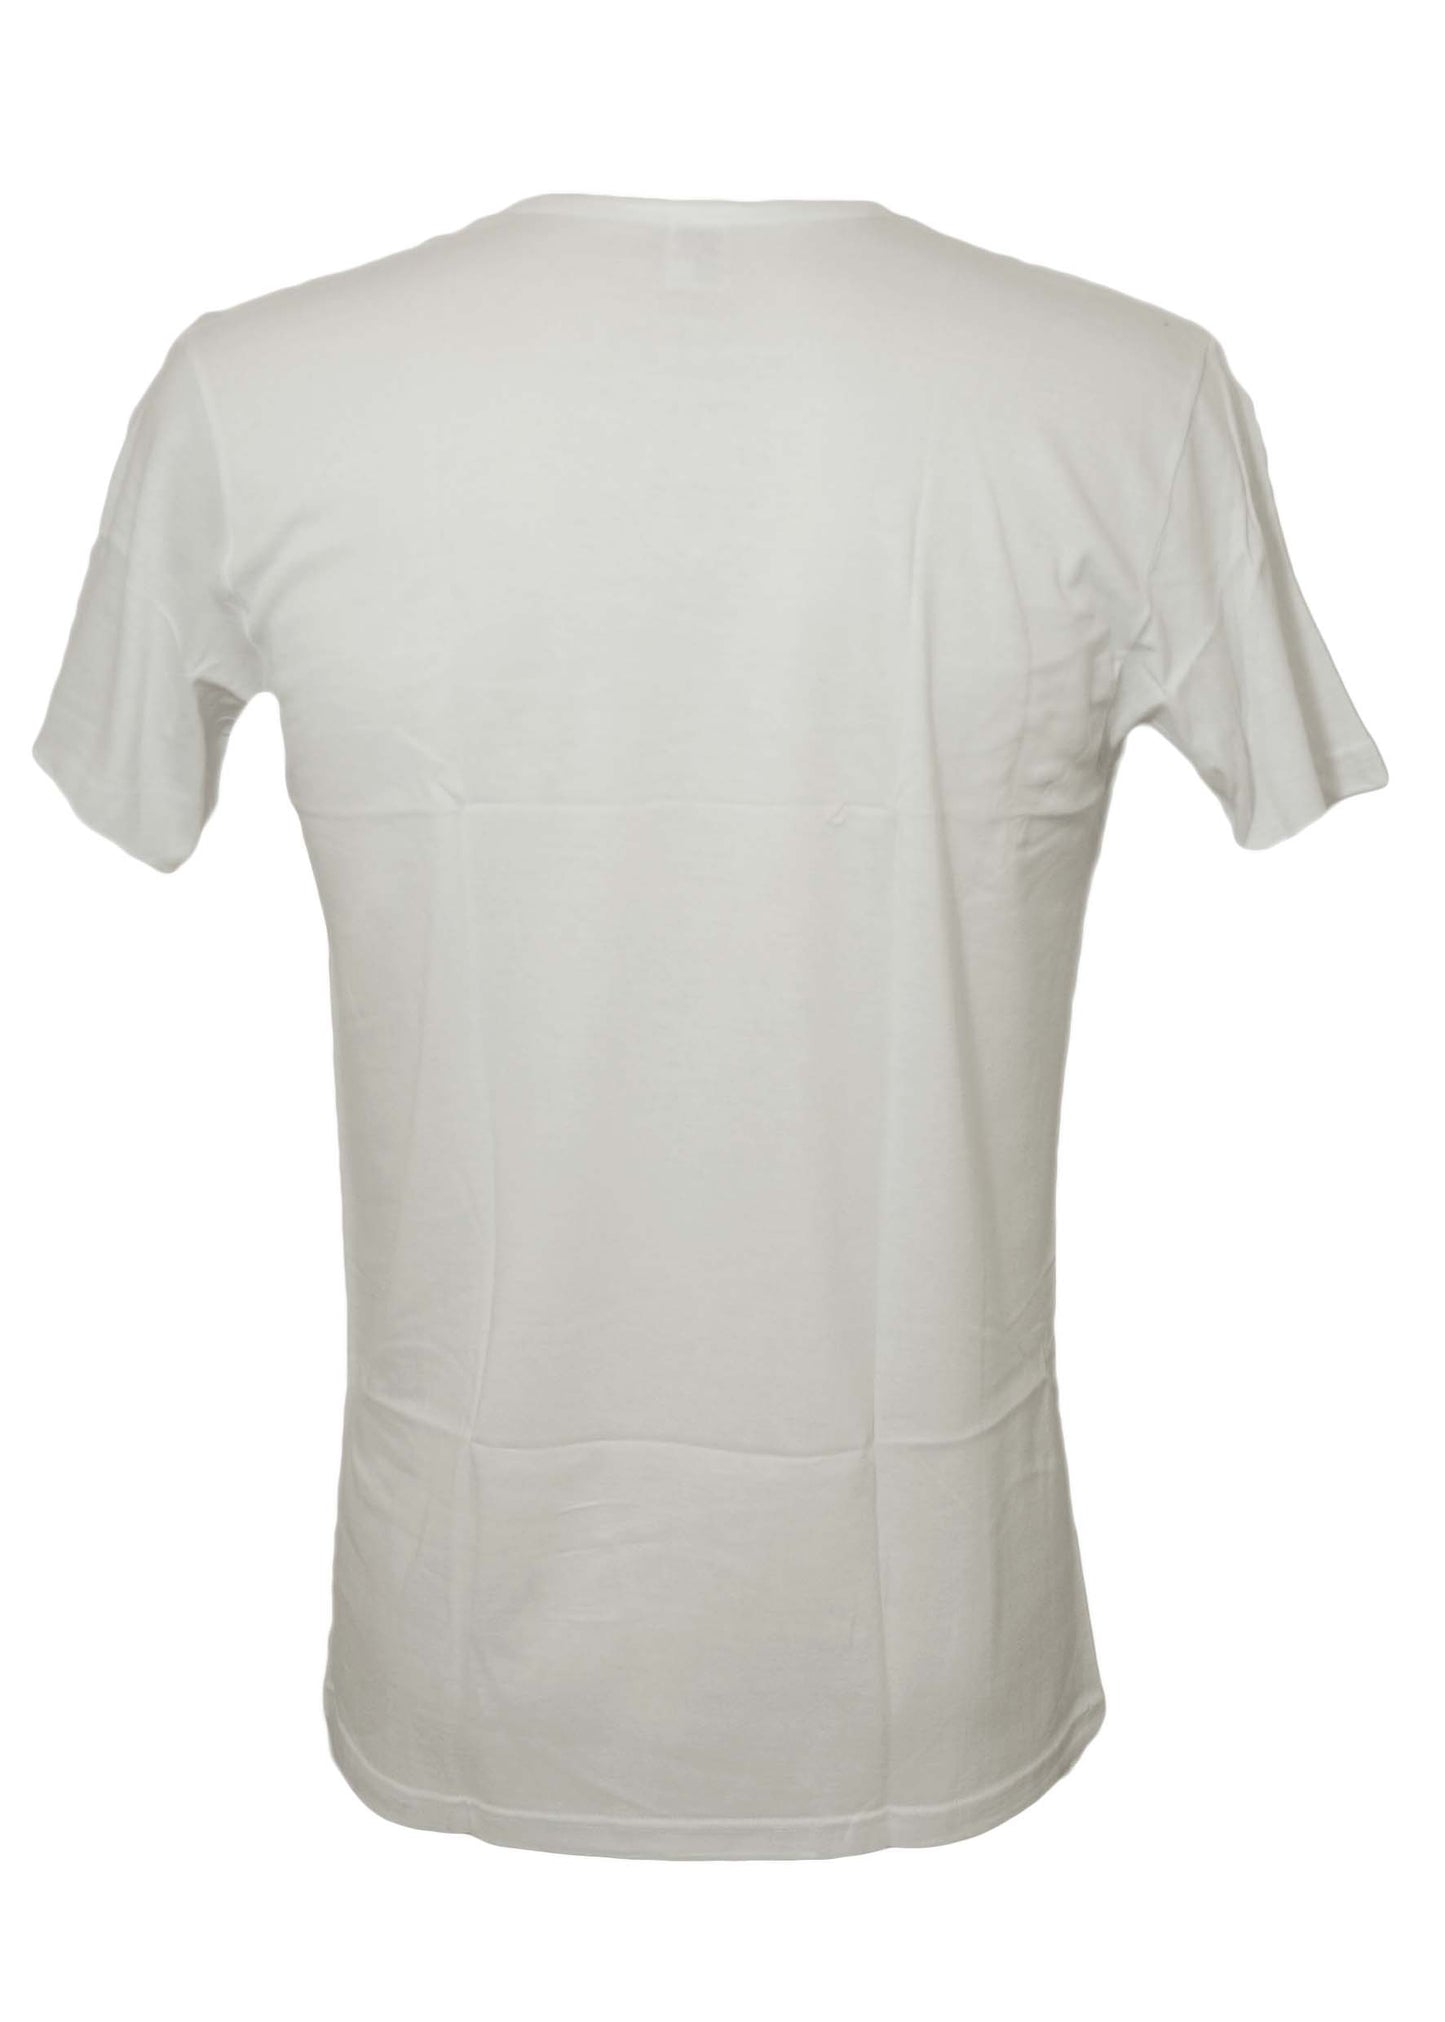 Garda - 0026 - T-shirt